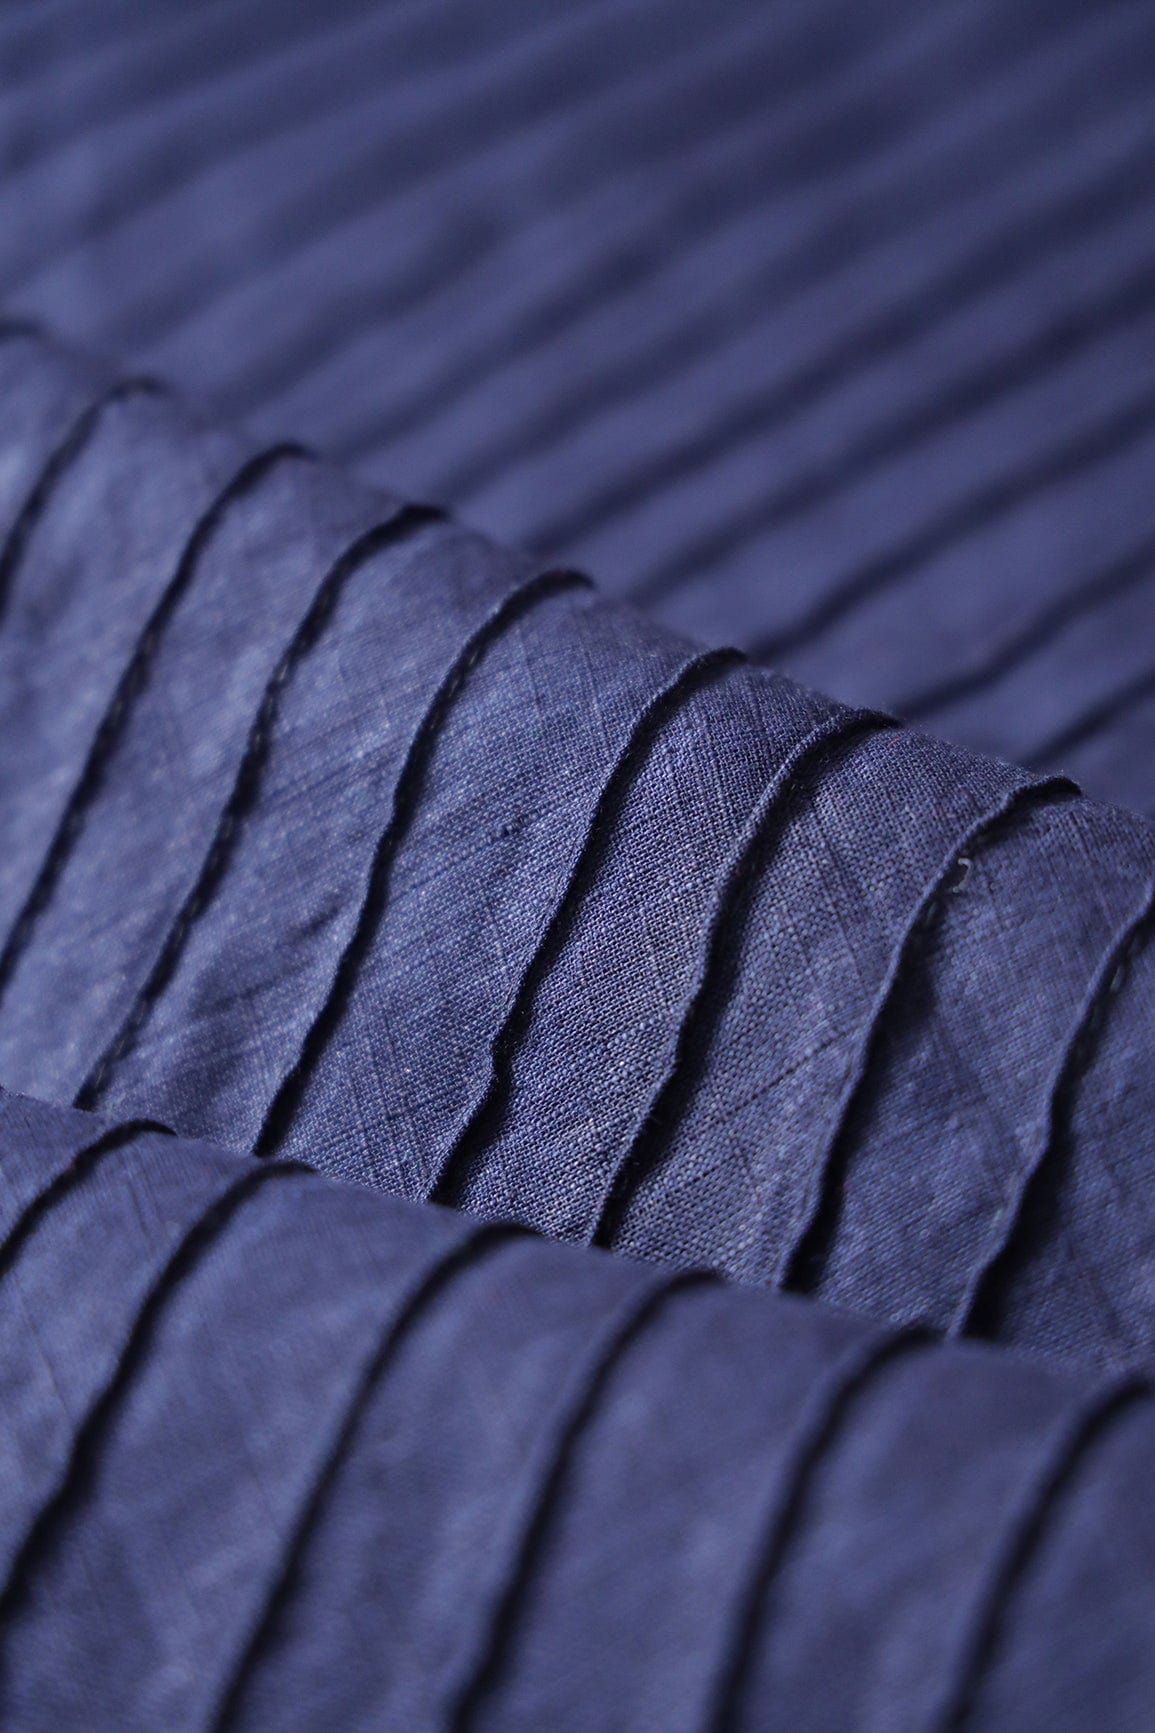 doeraa Plain Dyed Fabrics Navy Blue Stripes Pin-Tucks Plain Cotton Fabric